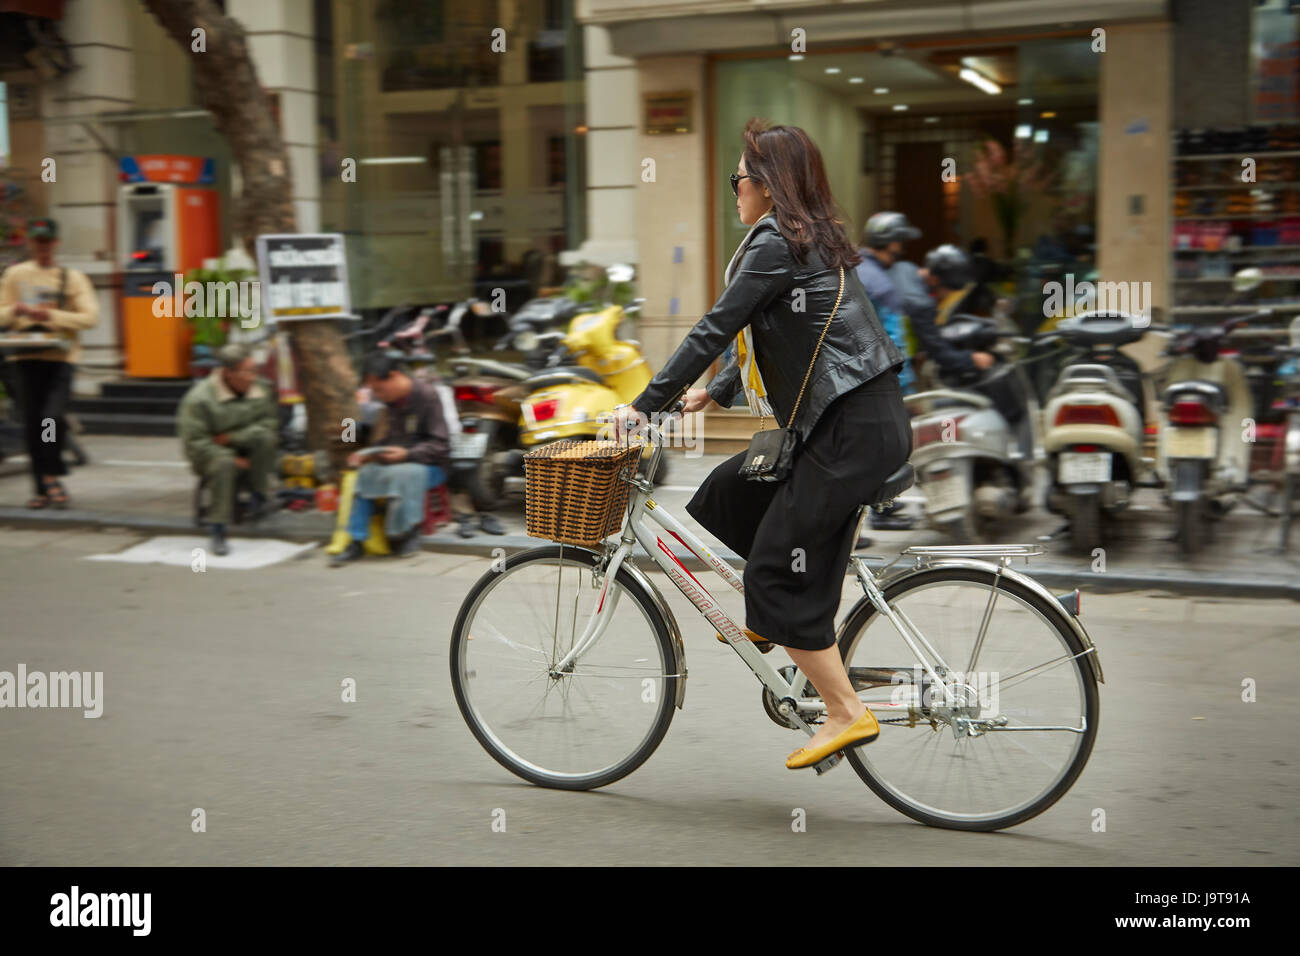 Stylish woman on bicycle, Old Quarter, Hanoi, Vietnam Stock Photo